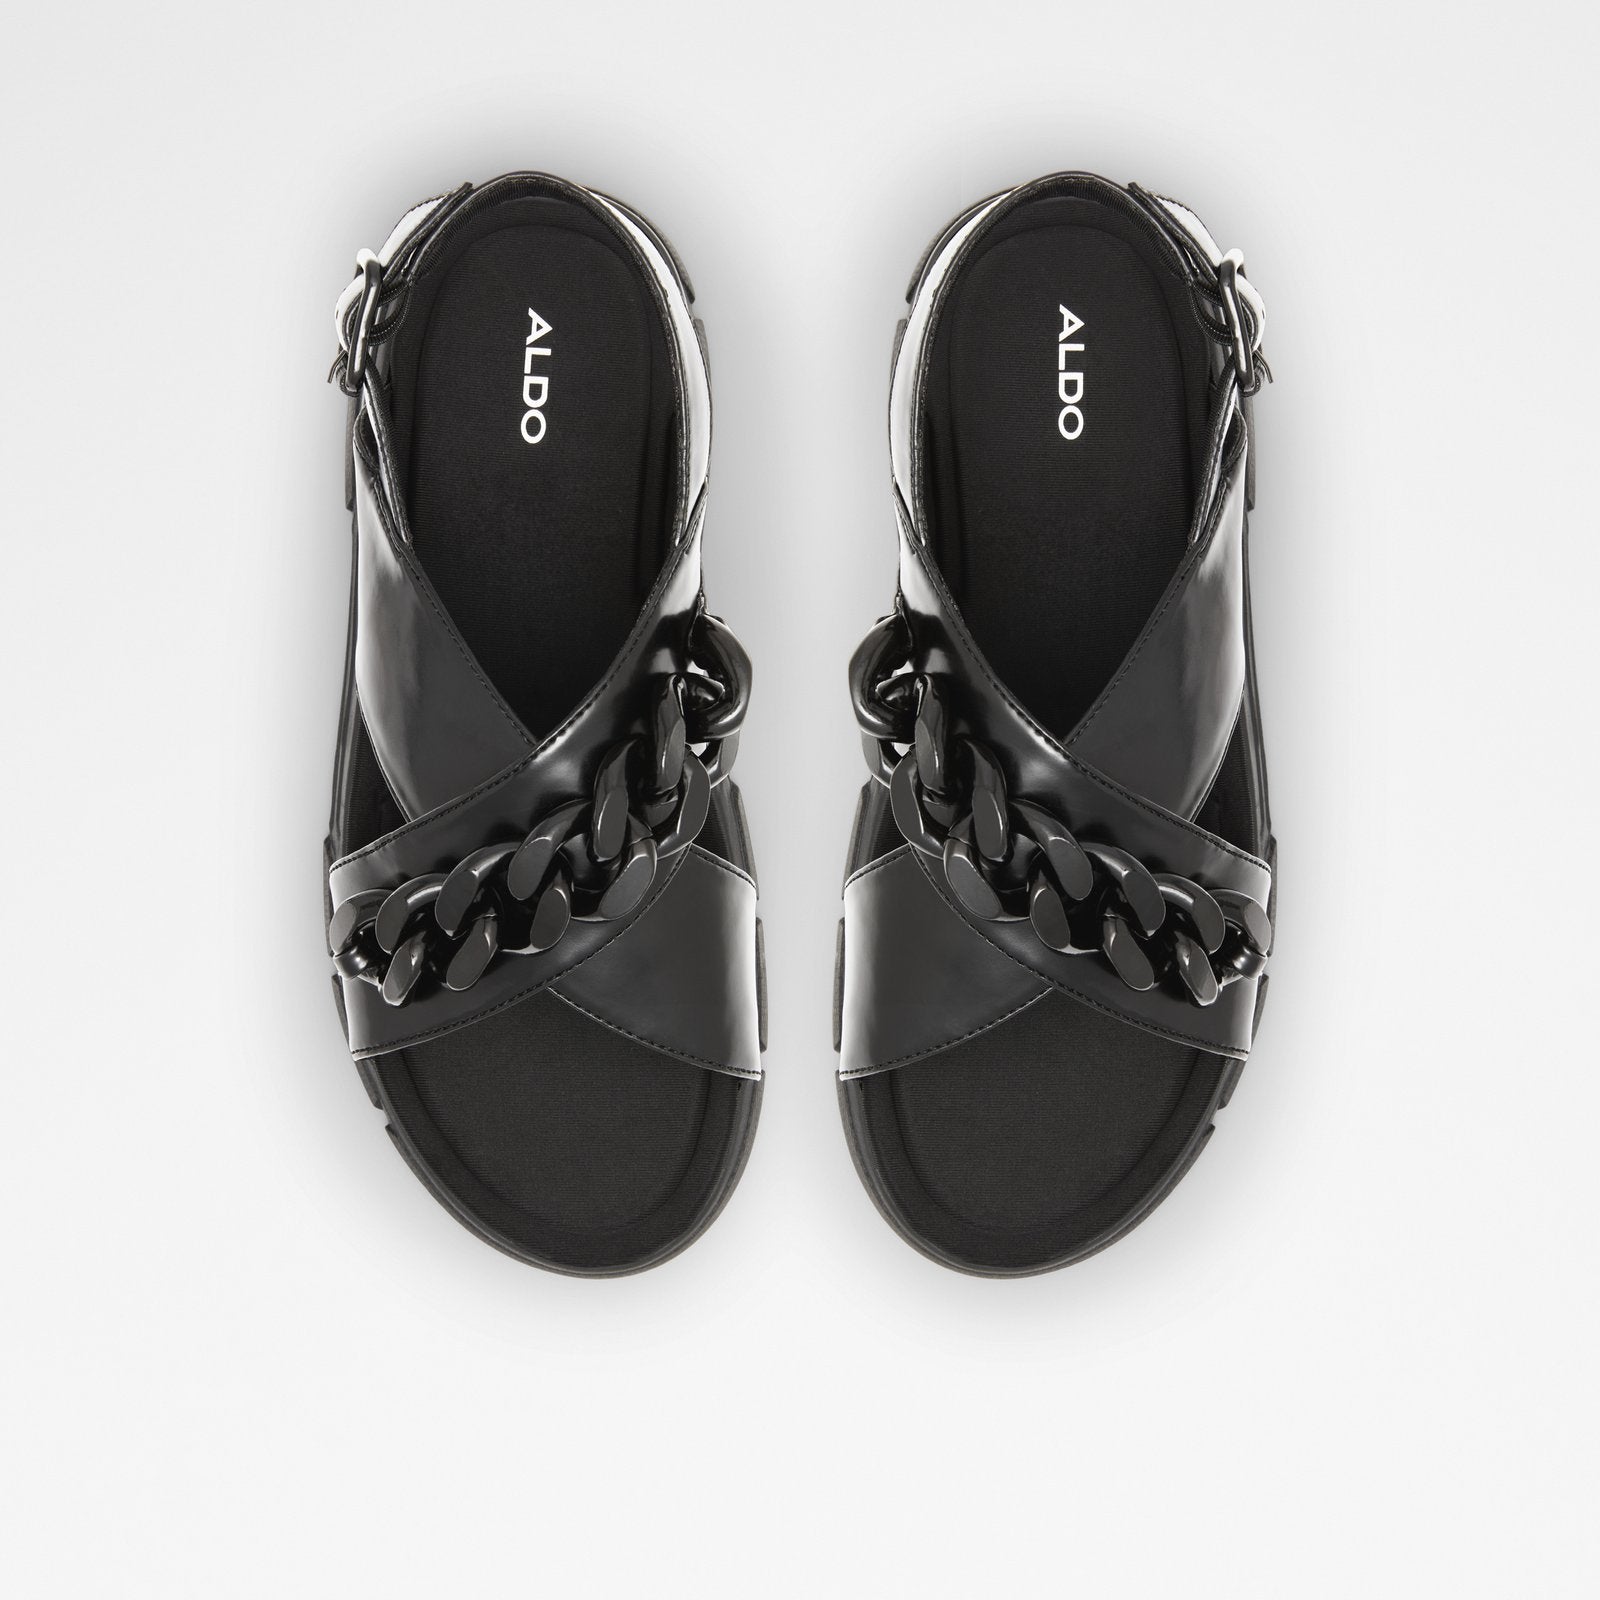 Strappalx Men Shoes - Black - ALDO KSA